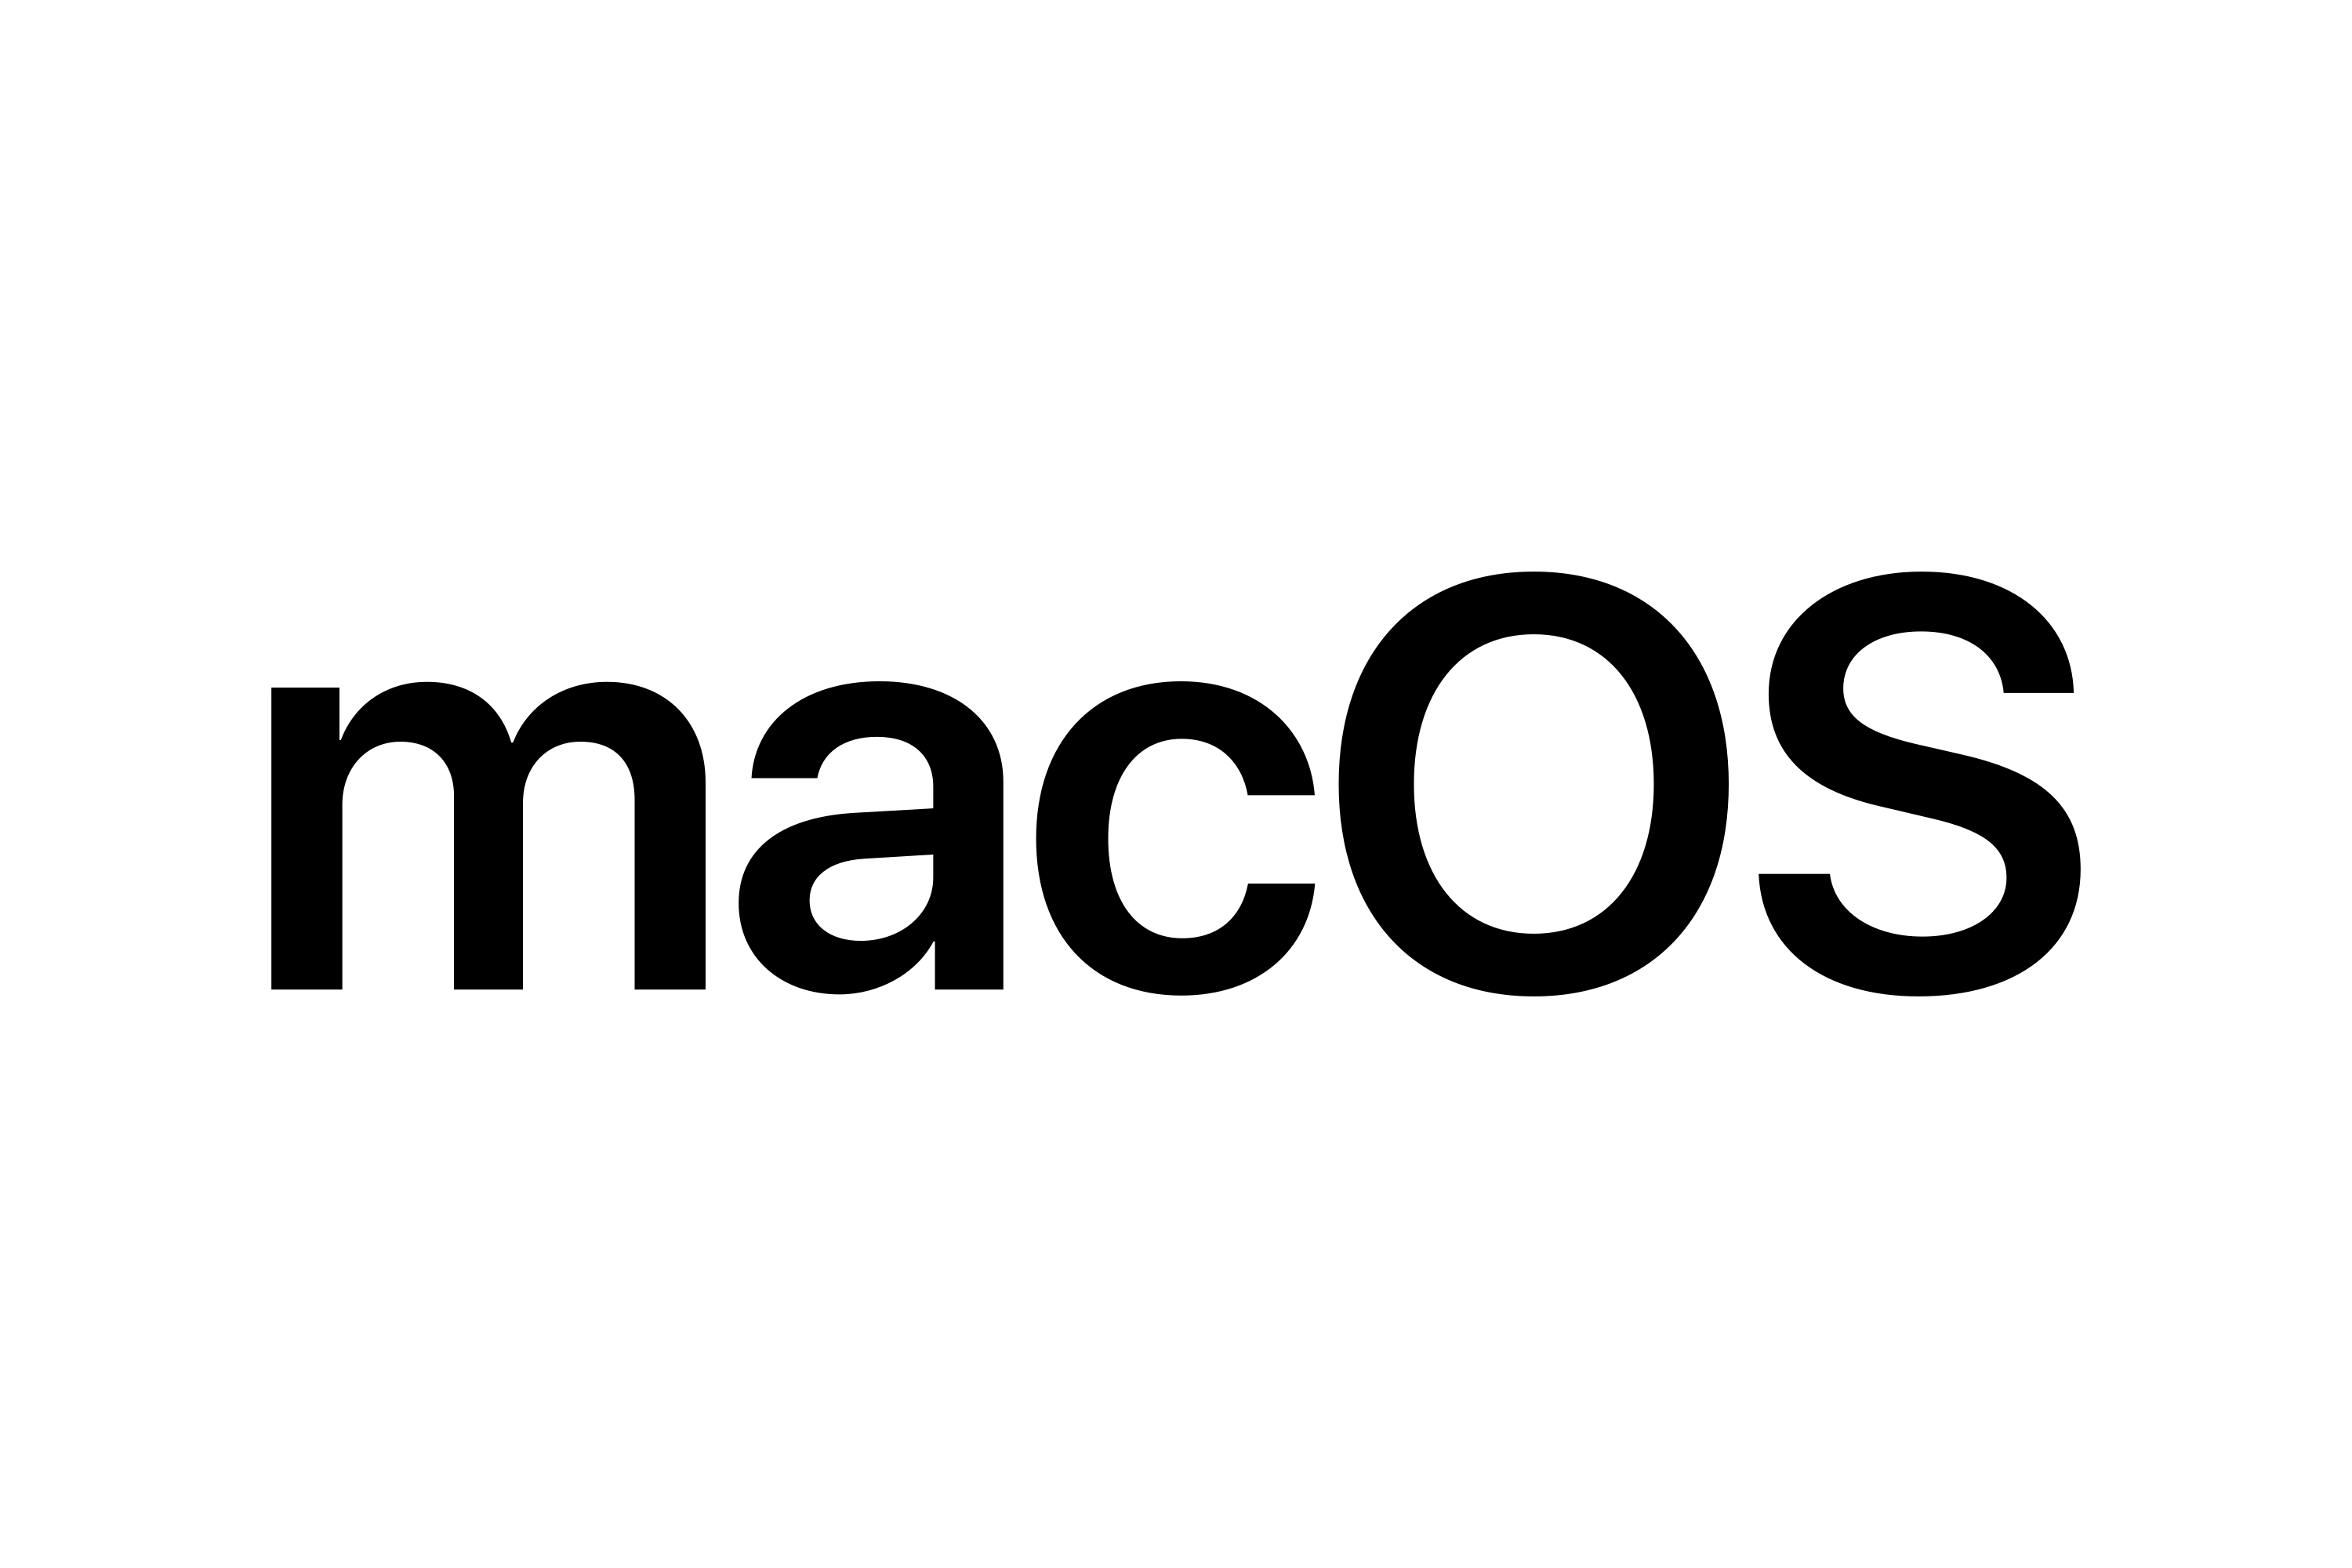 Download Download macOS Logo in SVG Vector or PNG File Format ...